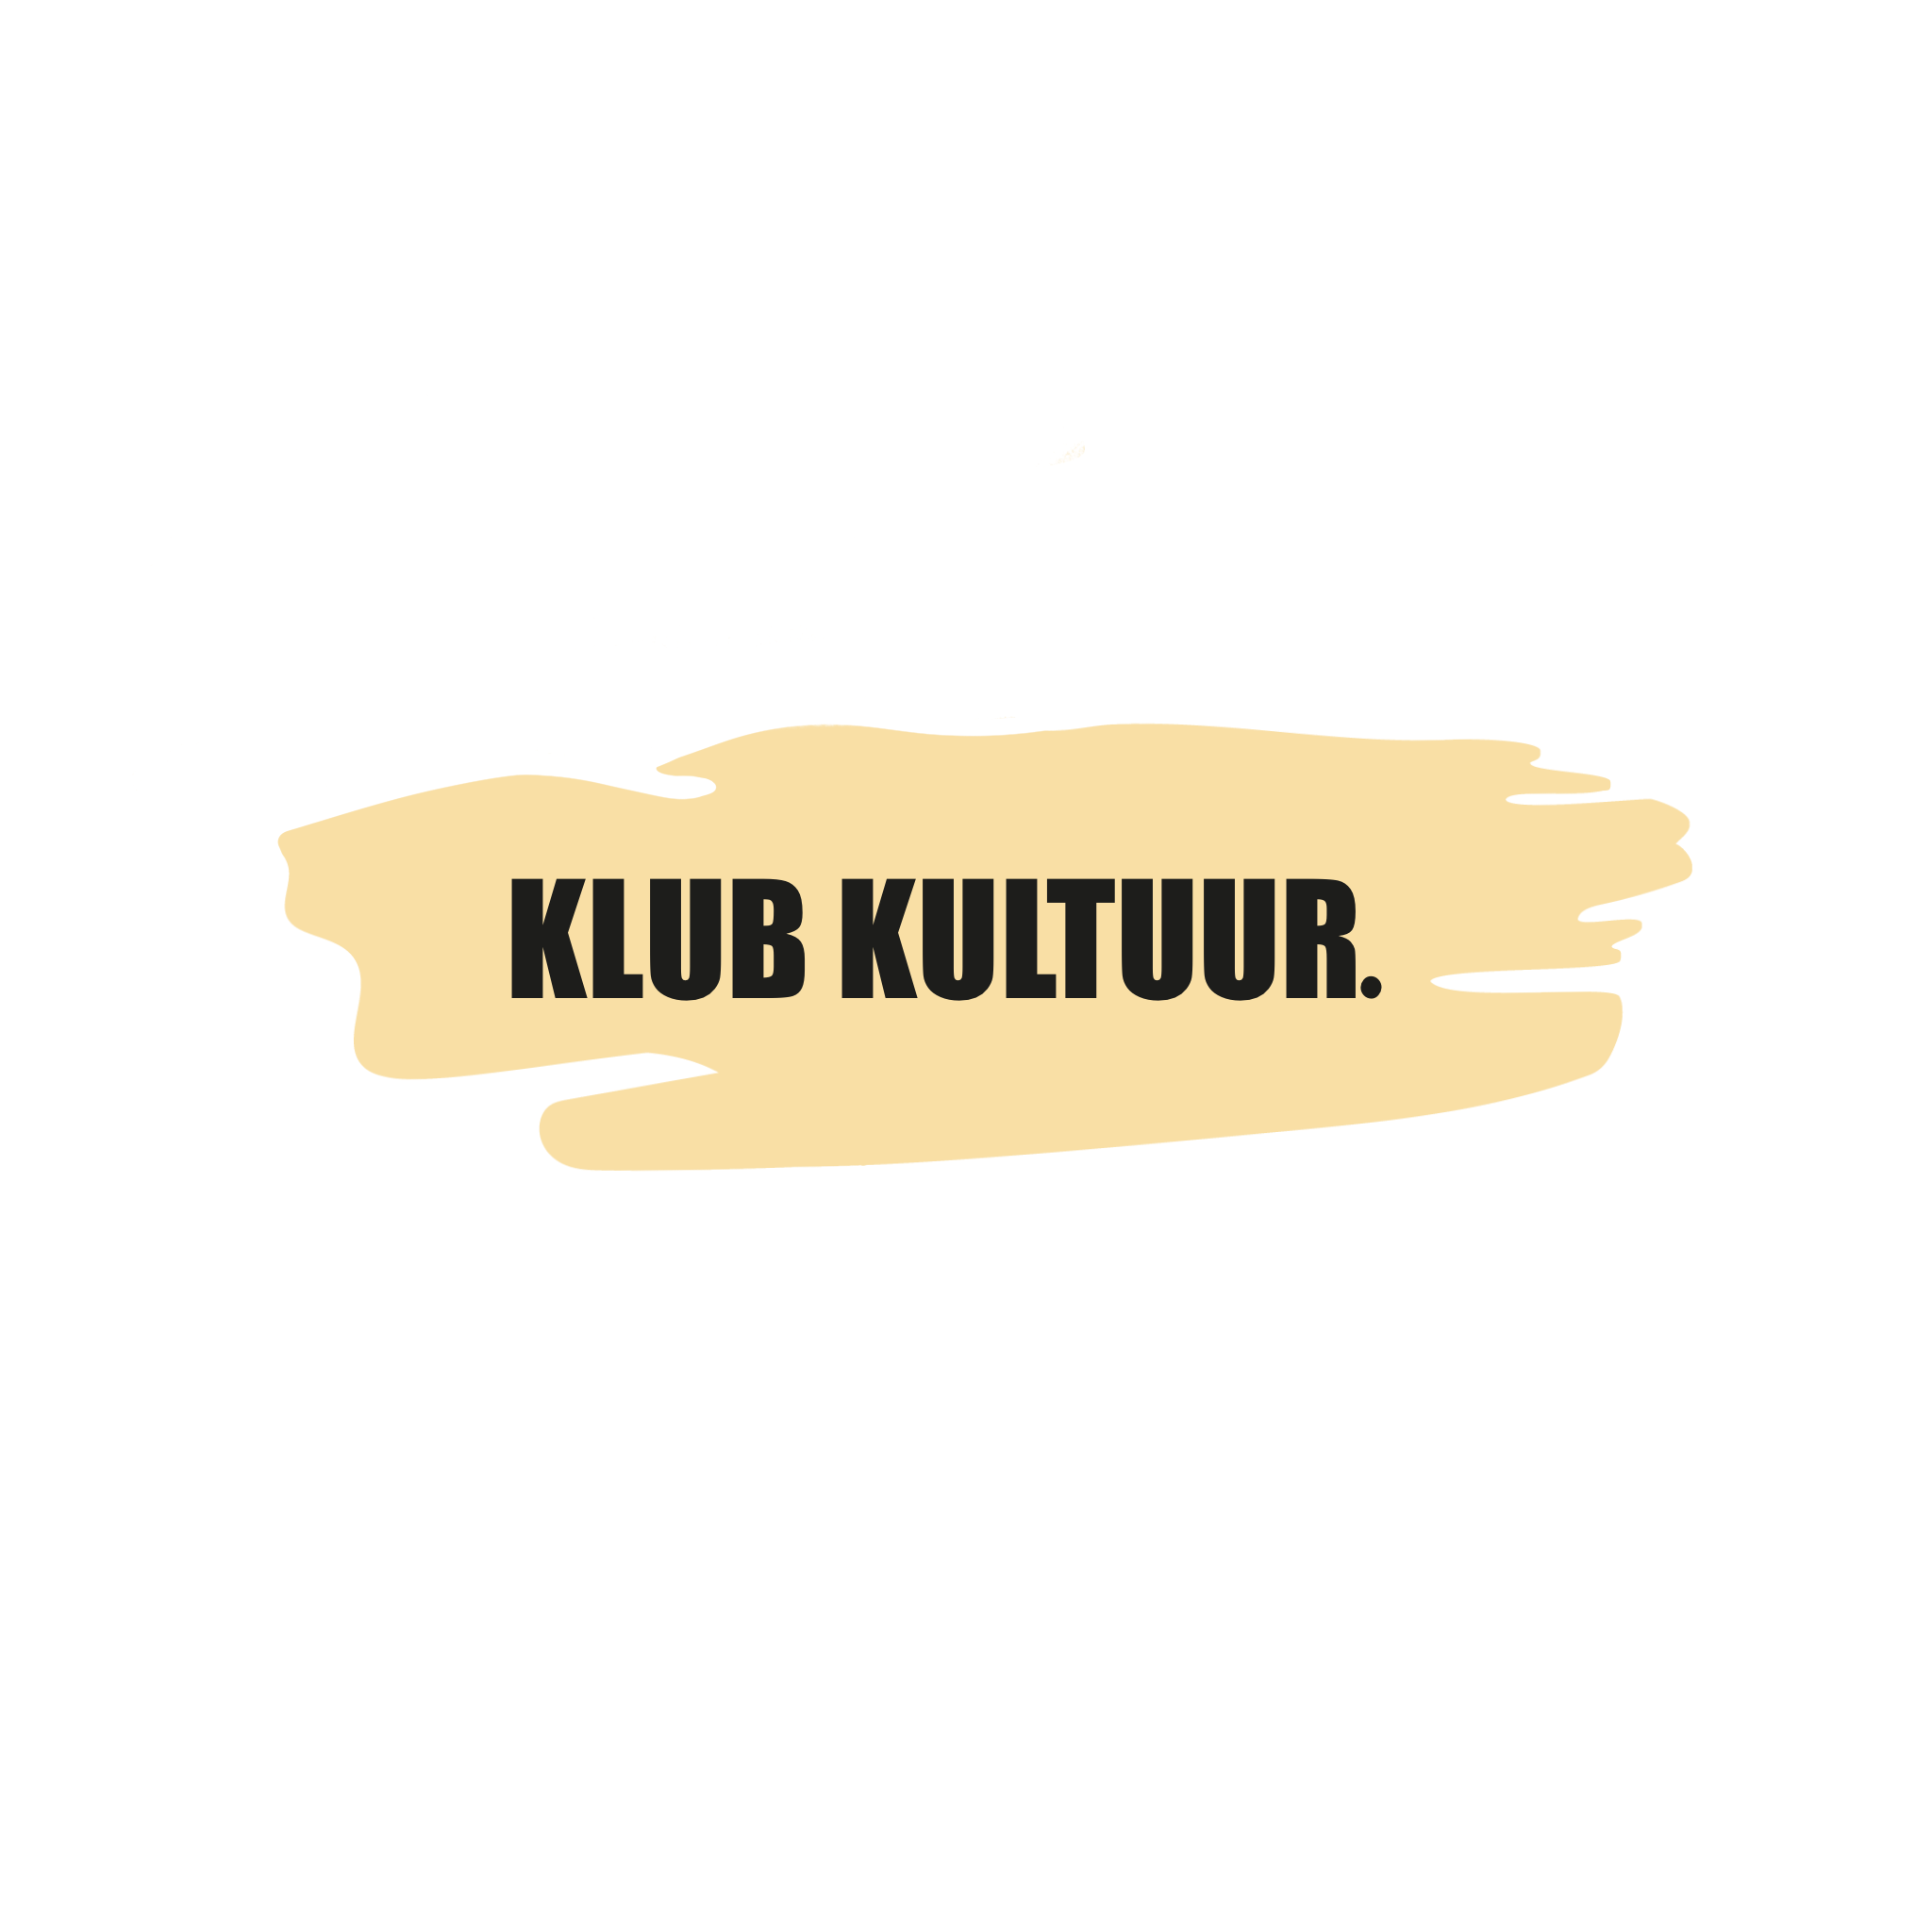 Klub Kultuur. vz